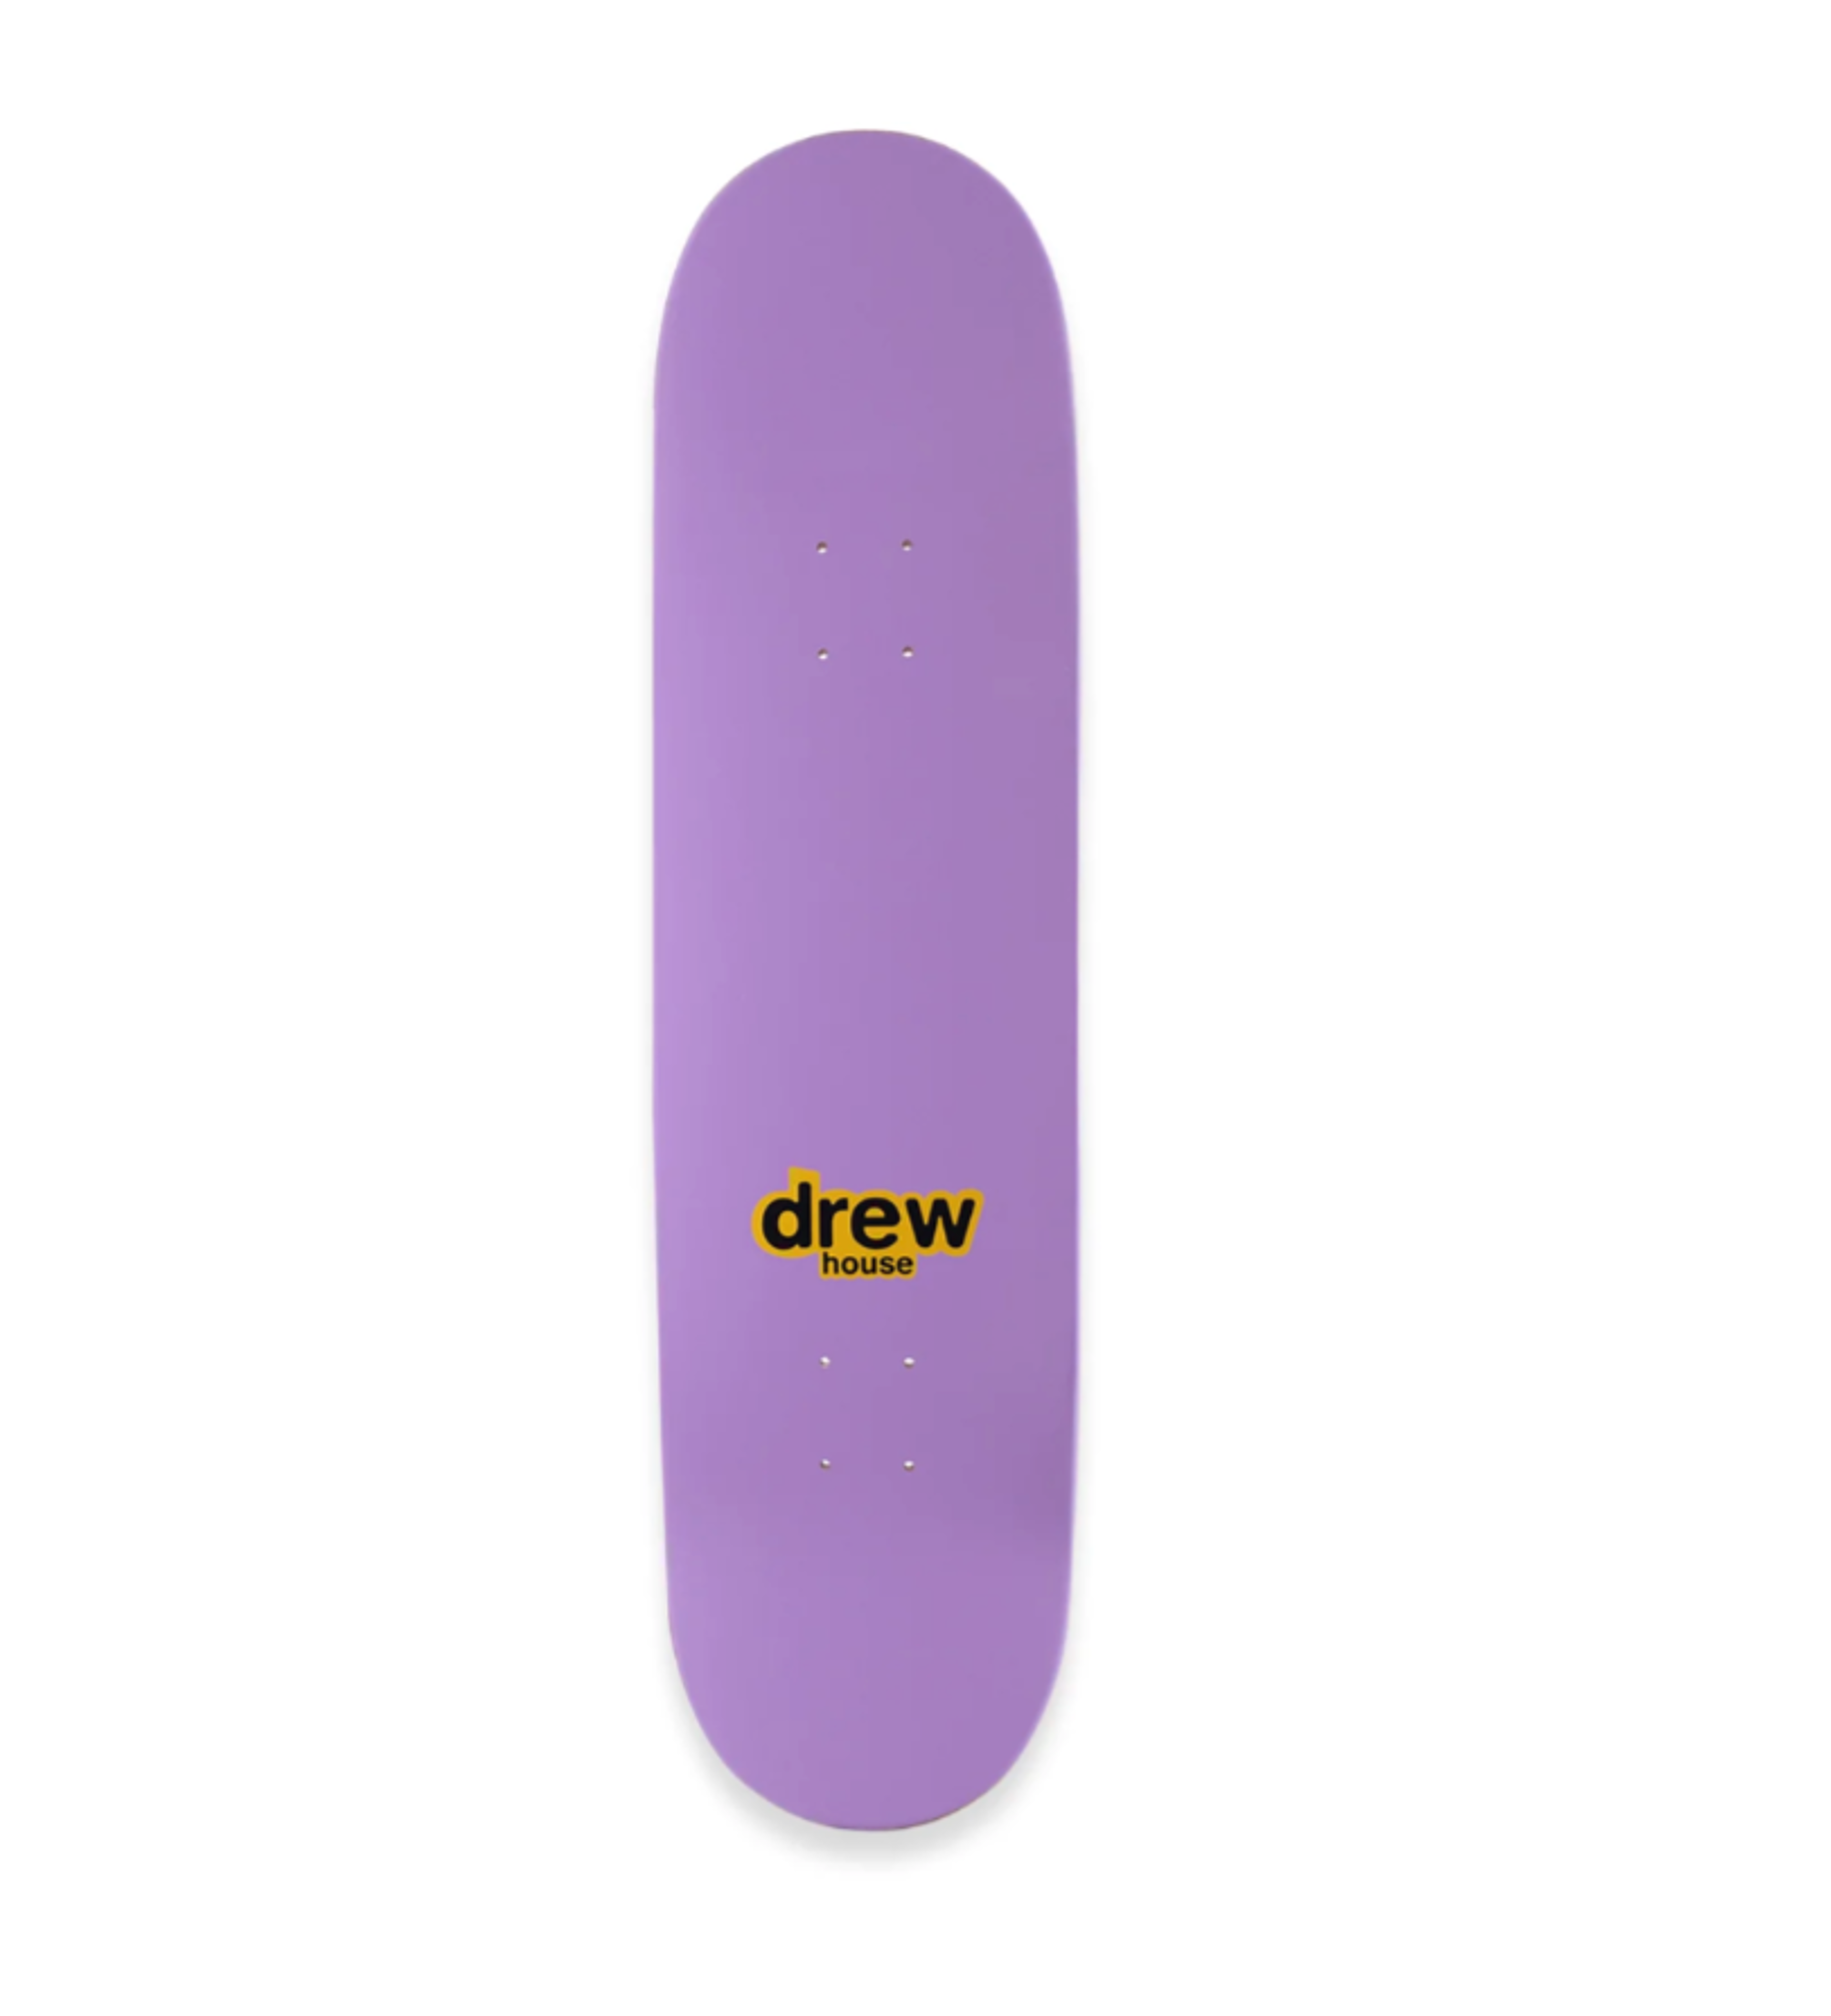 drewhouse skate deck